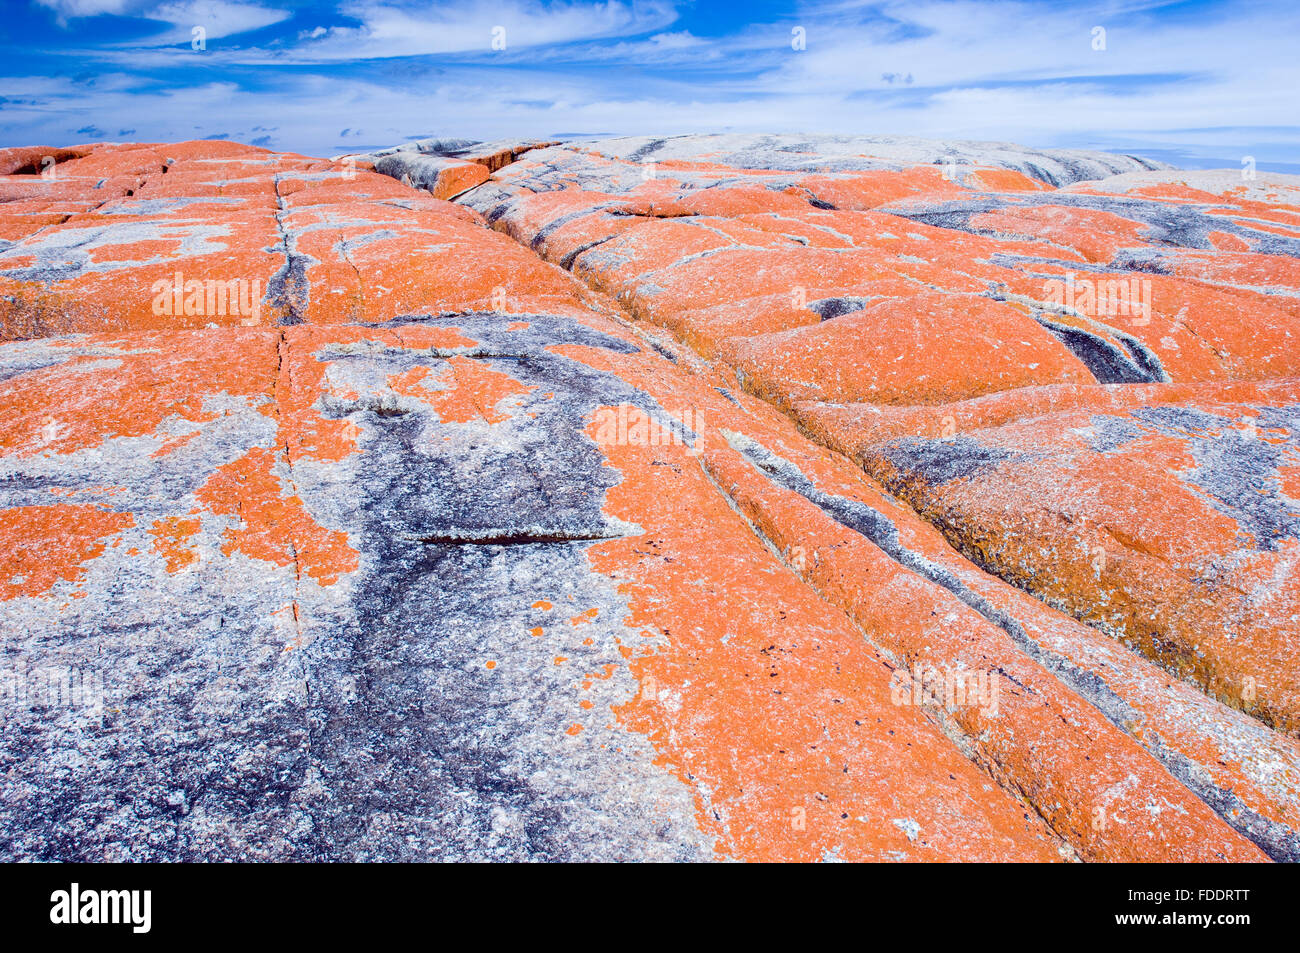 Bay of Fires, East Coast Tasmania showing rocks with orange lichens Stock Photo